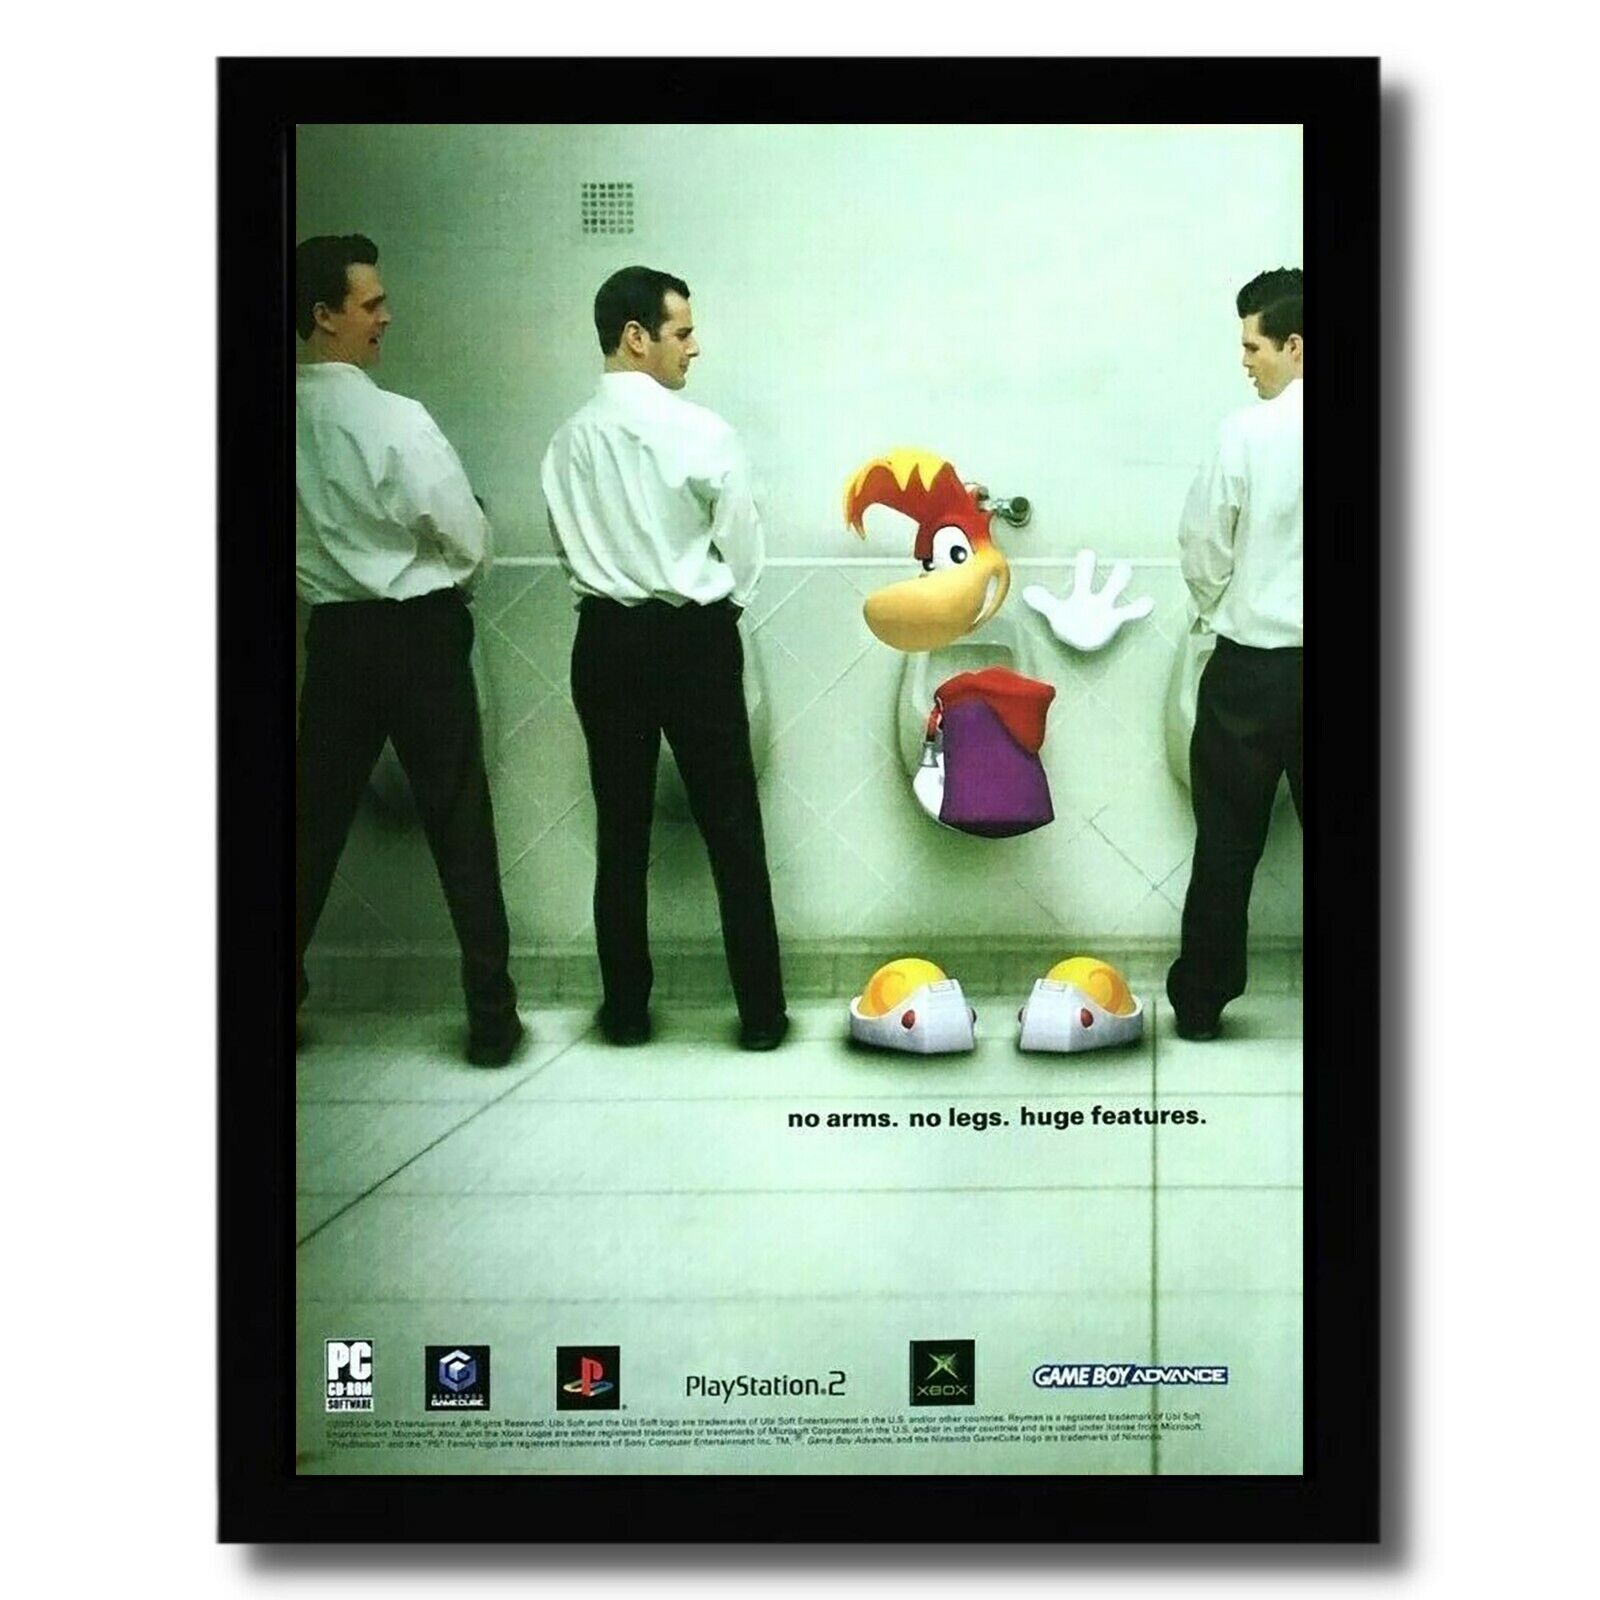 2003 Rayman 3: Hoodlum Havoc Framed Print Ad/Poster PS2 Xbox Gamecube Promo Art